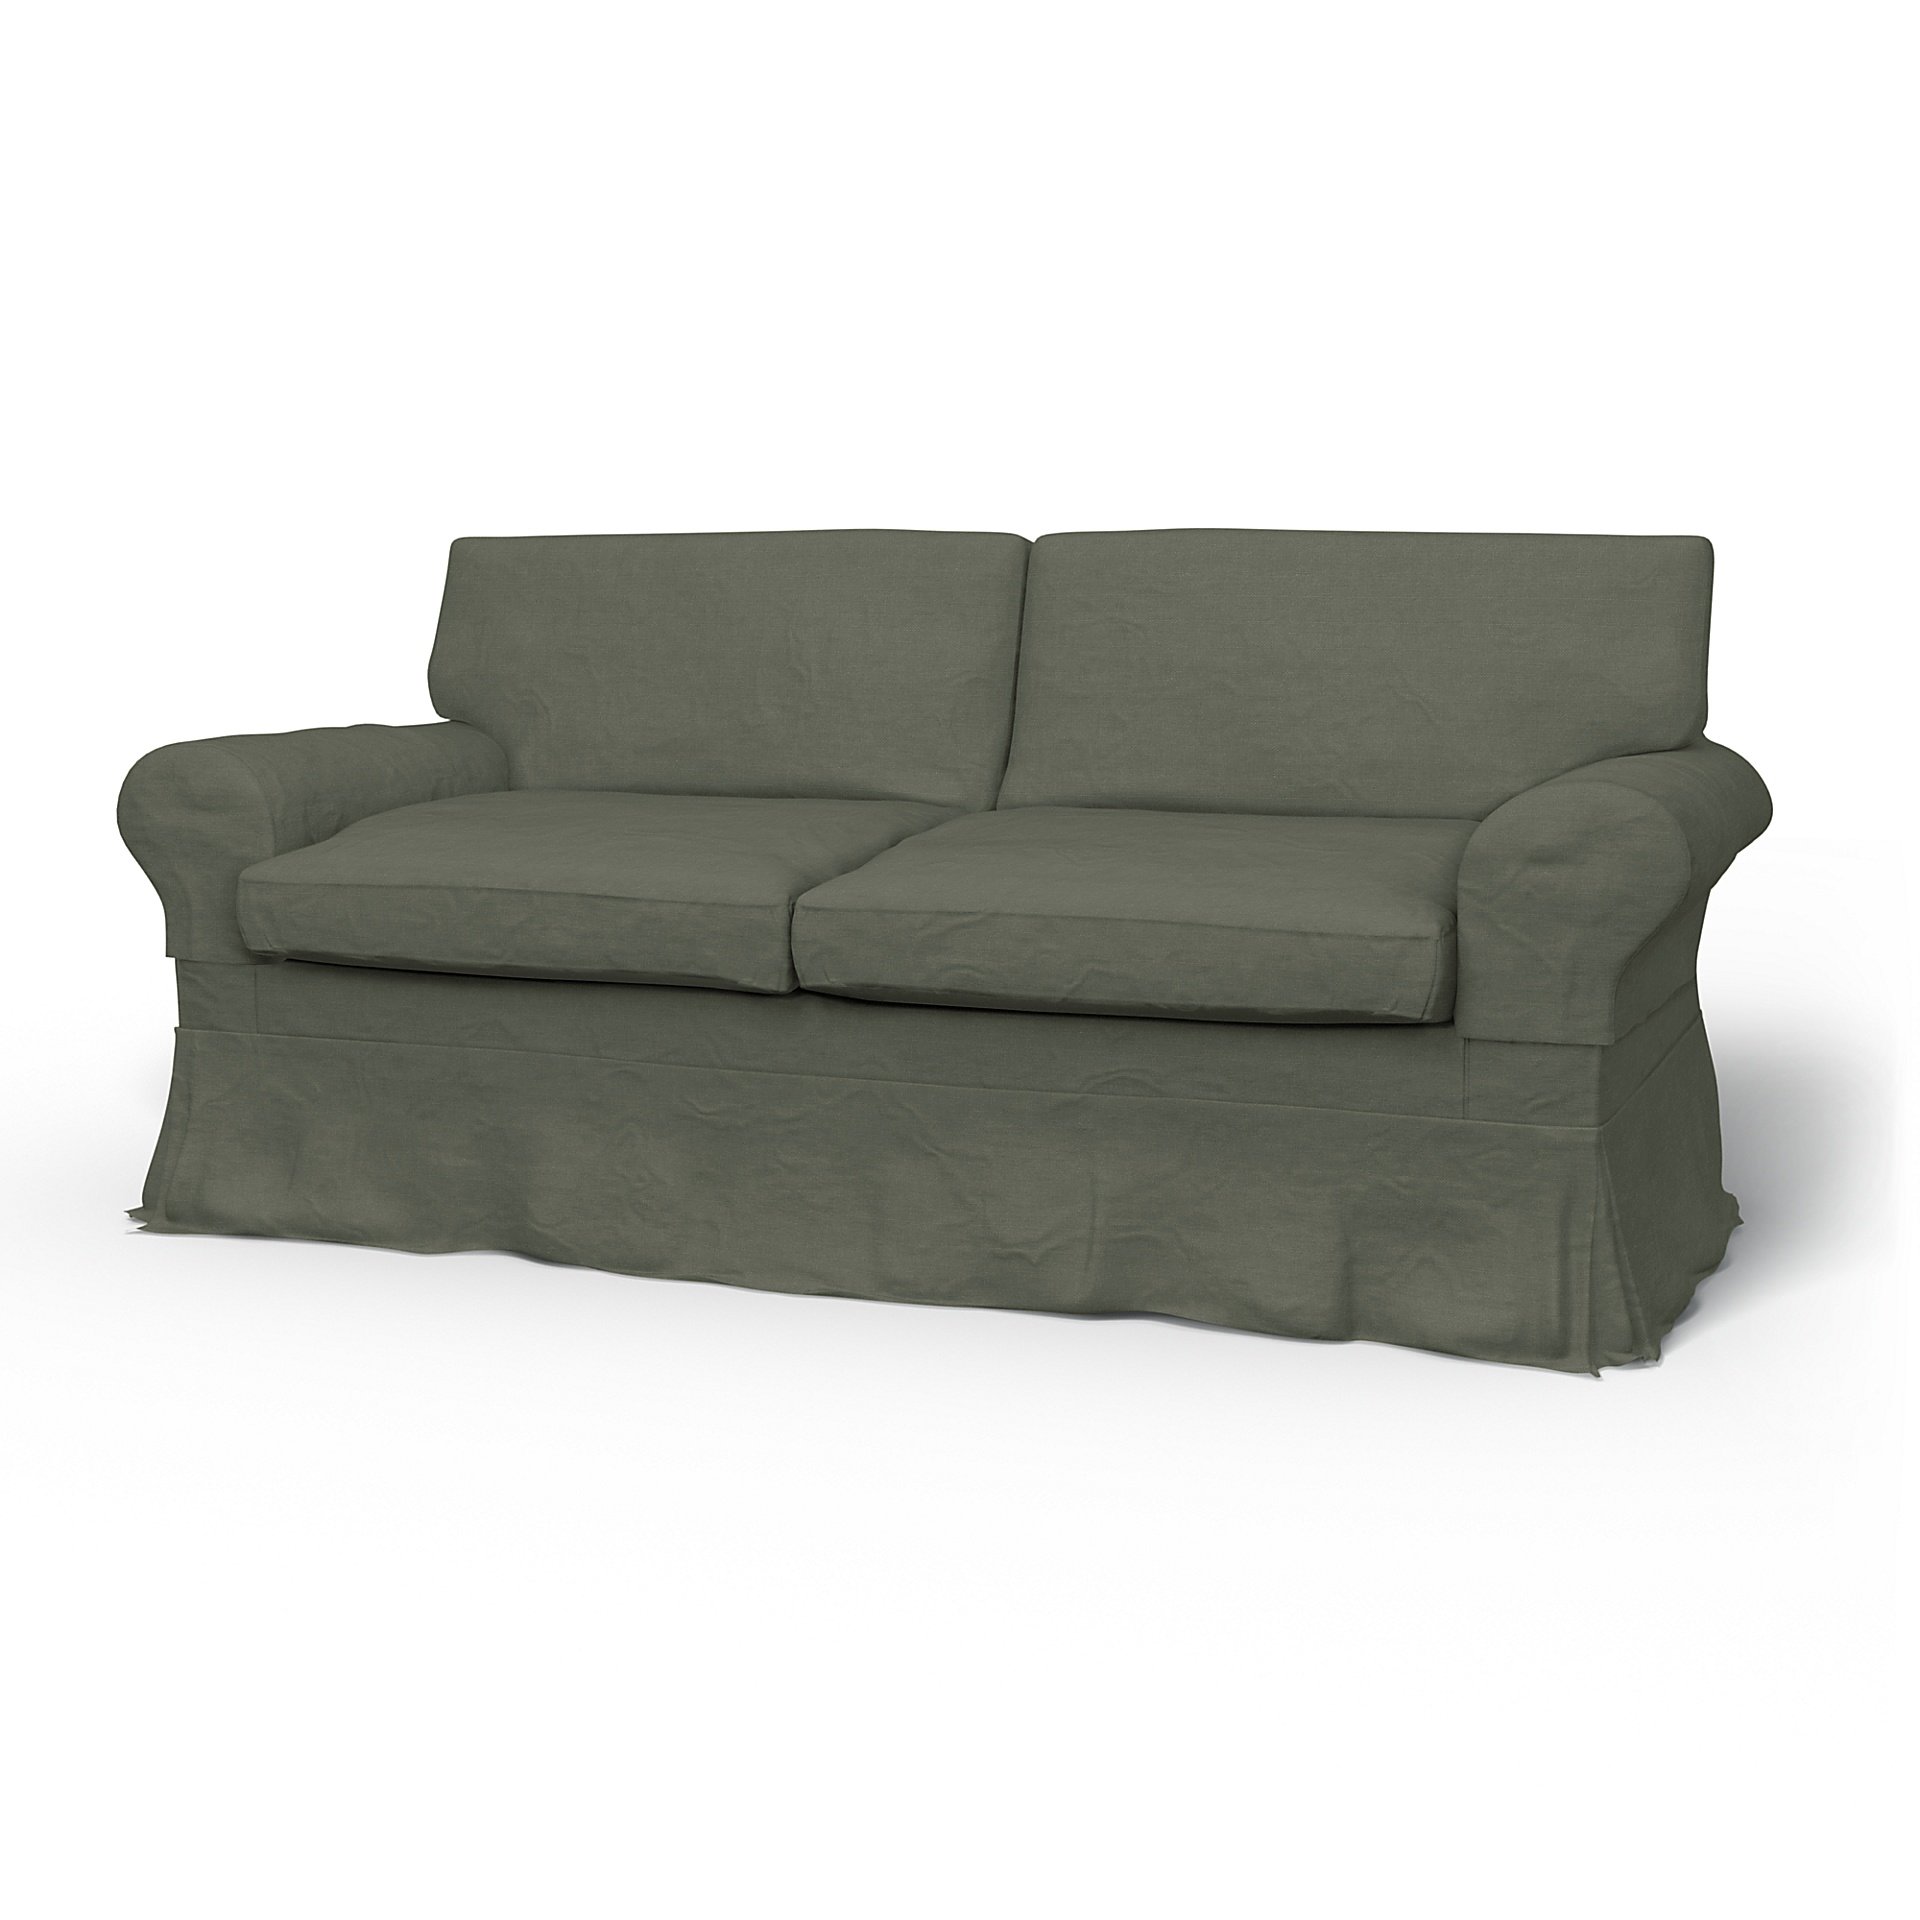 IKEA - Ektorp 2 Seater Sofa Bed Cover, Rosemary, Linen - Bemz